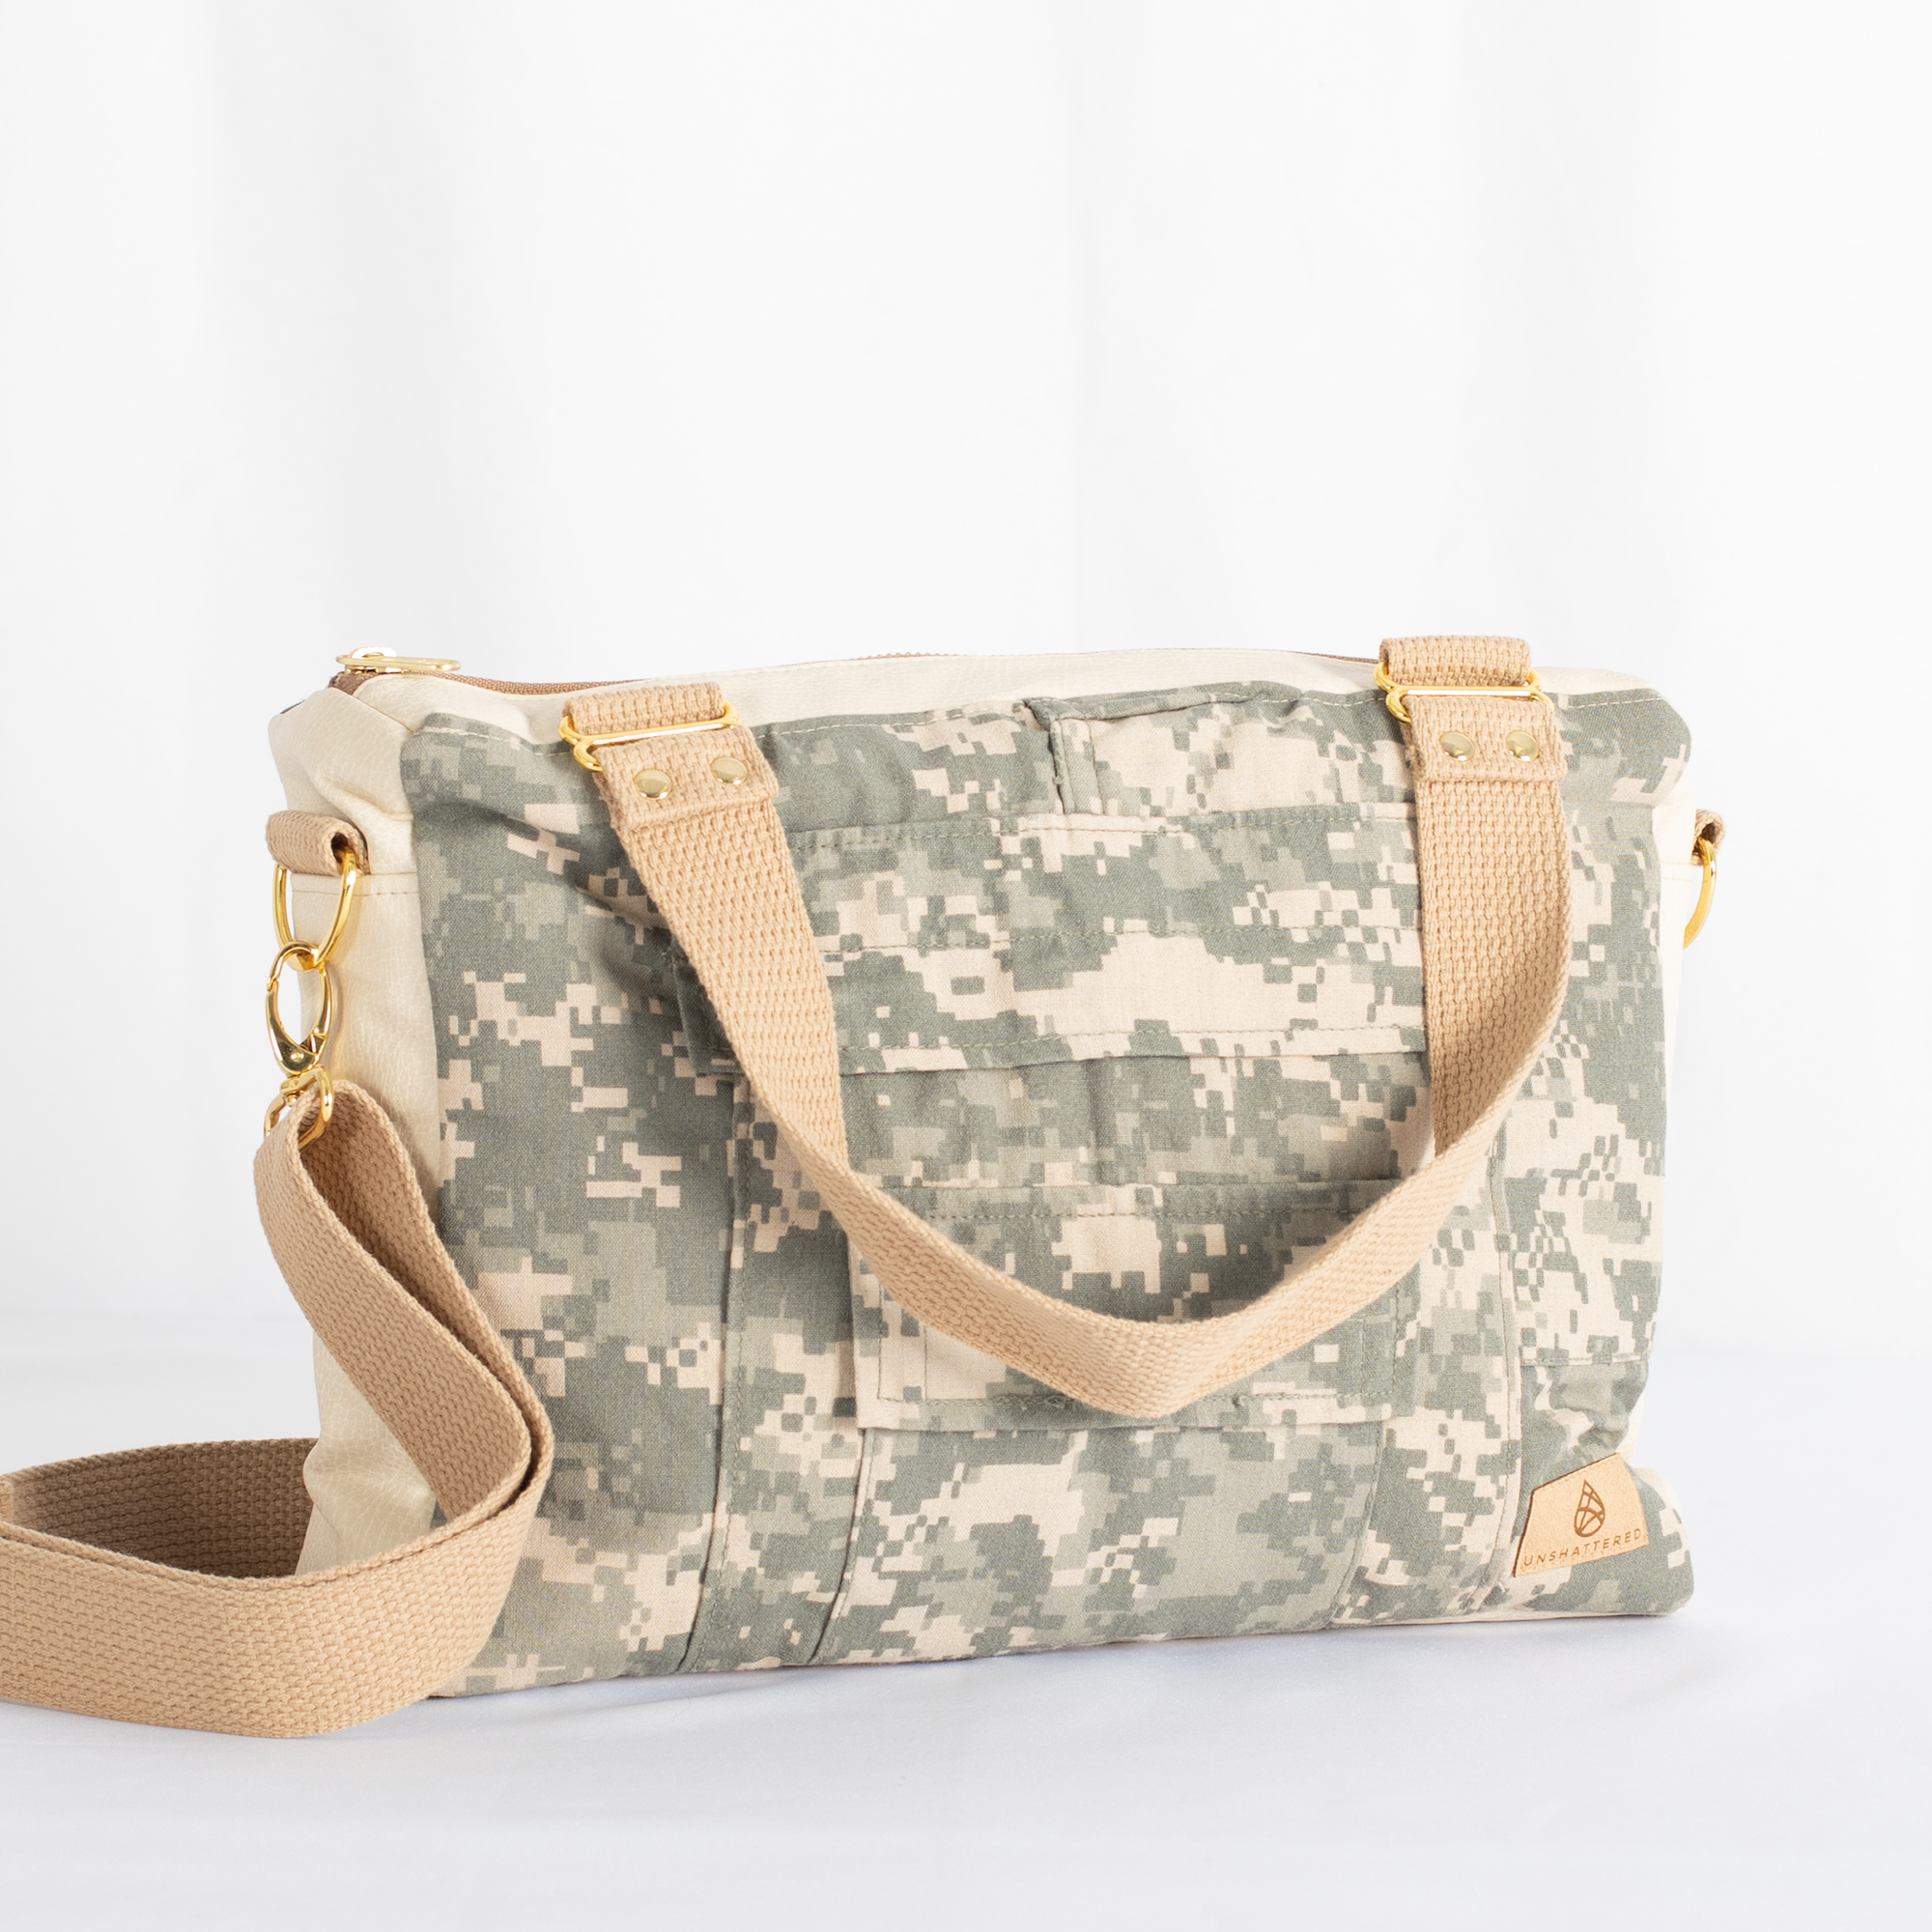 Cream Convertible Handbag with pocket in front